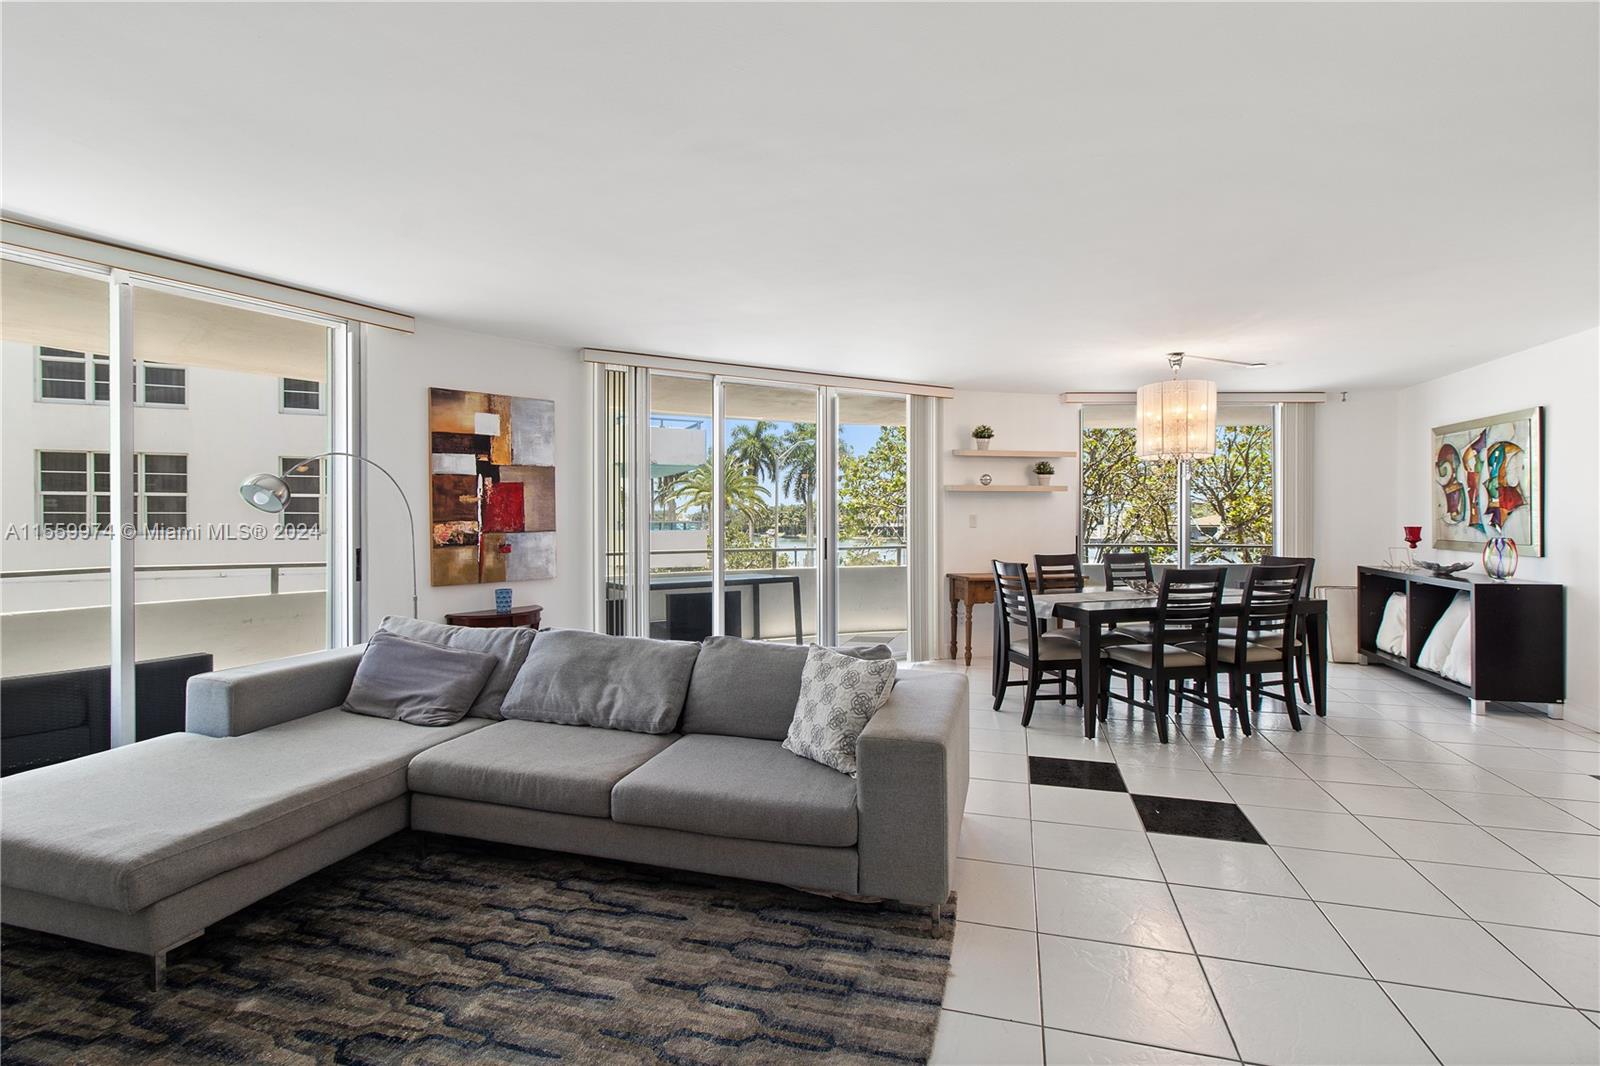 Rental Property at 5151 Collins Ave 324, Miami Beach, Miami-Dade County, Florida - Bedrooms: 2 
Bathrooms: 2  - $3,950 MO.